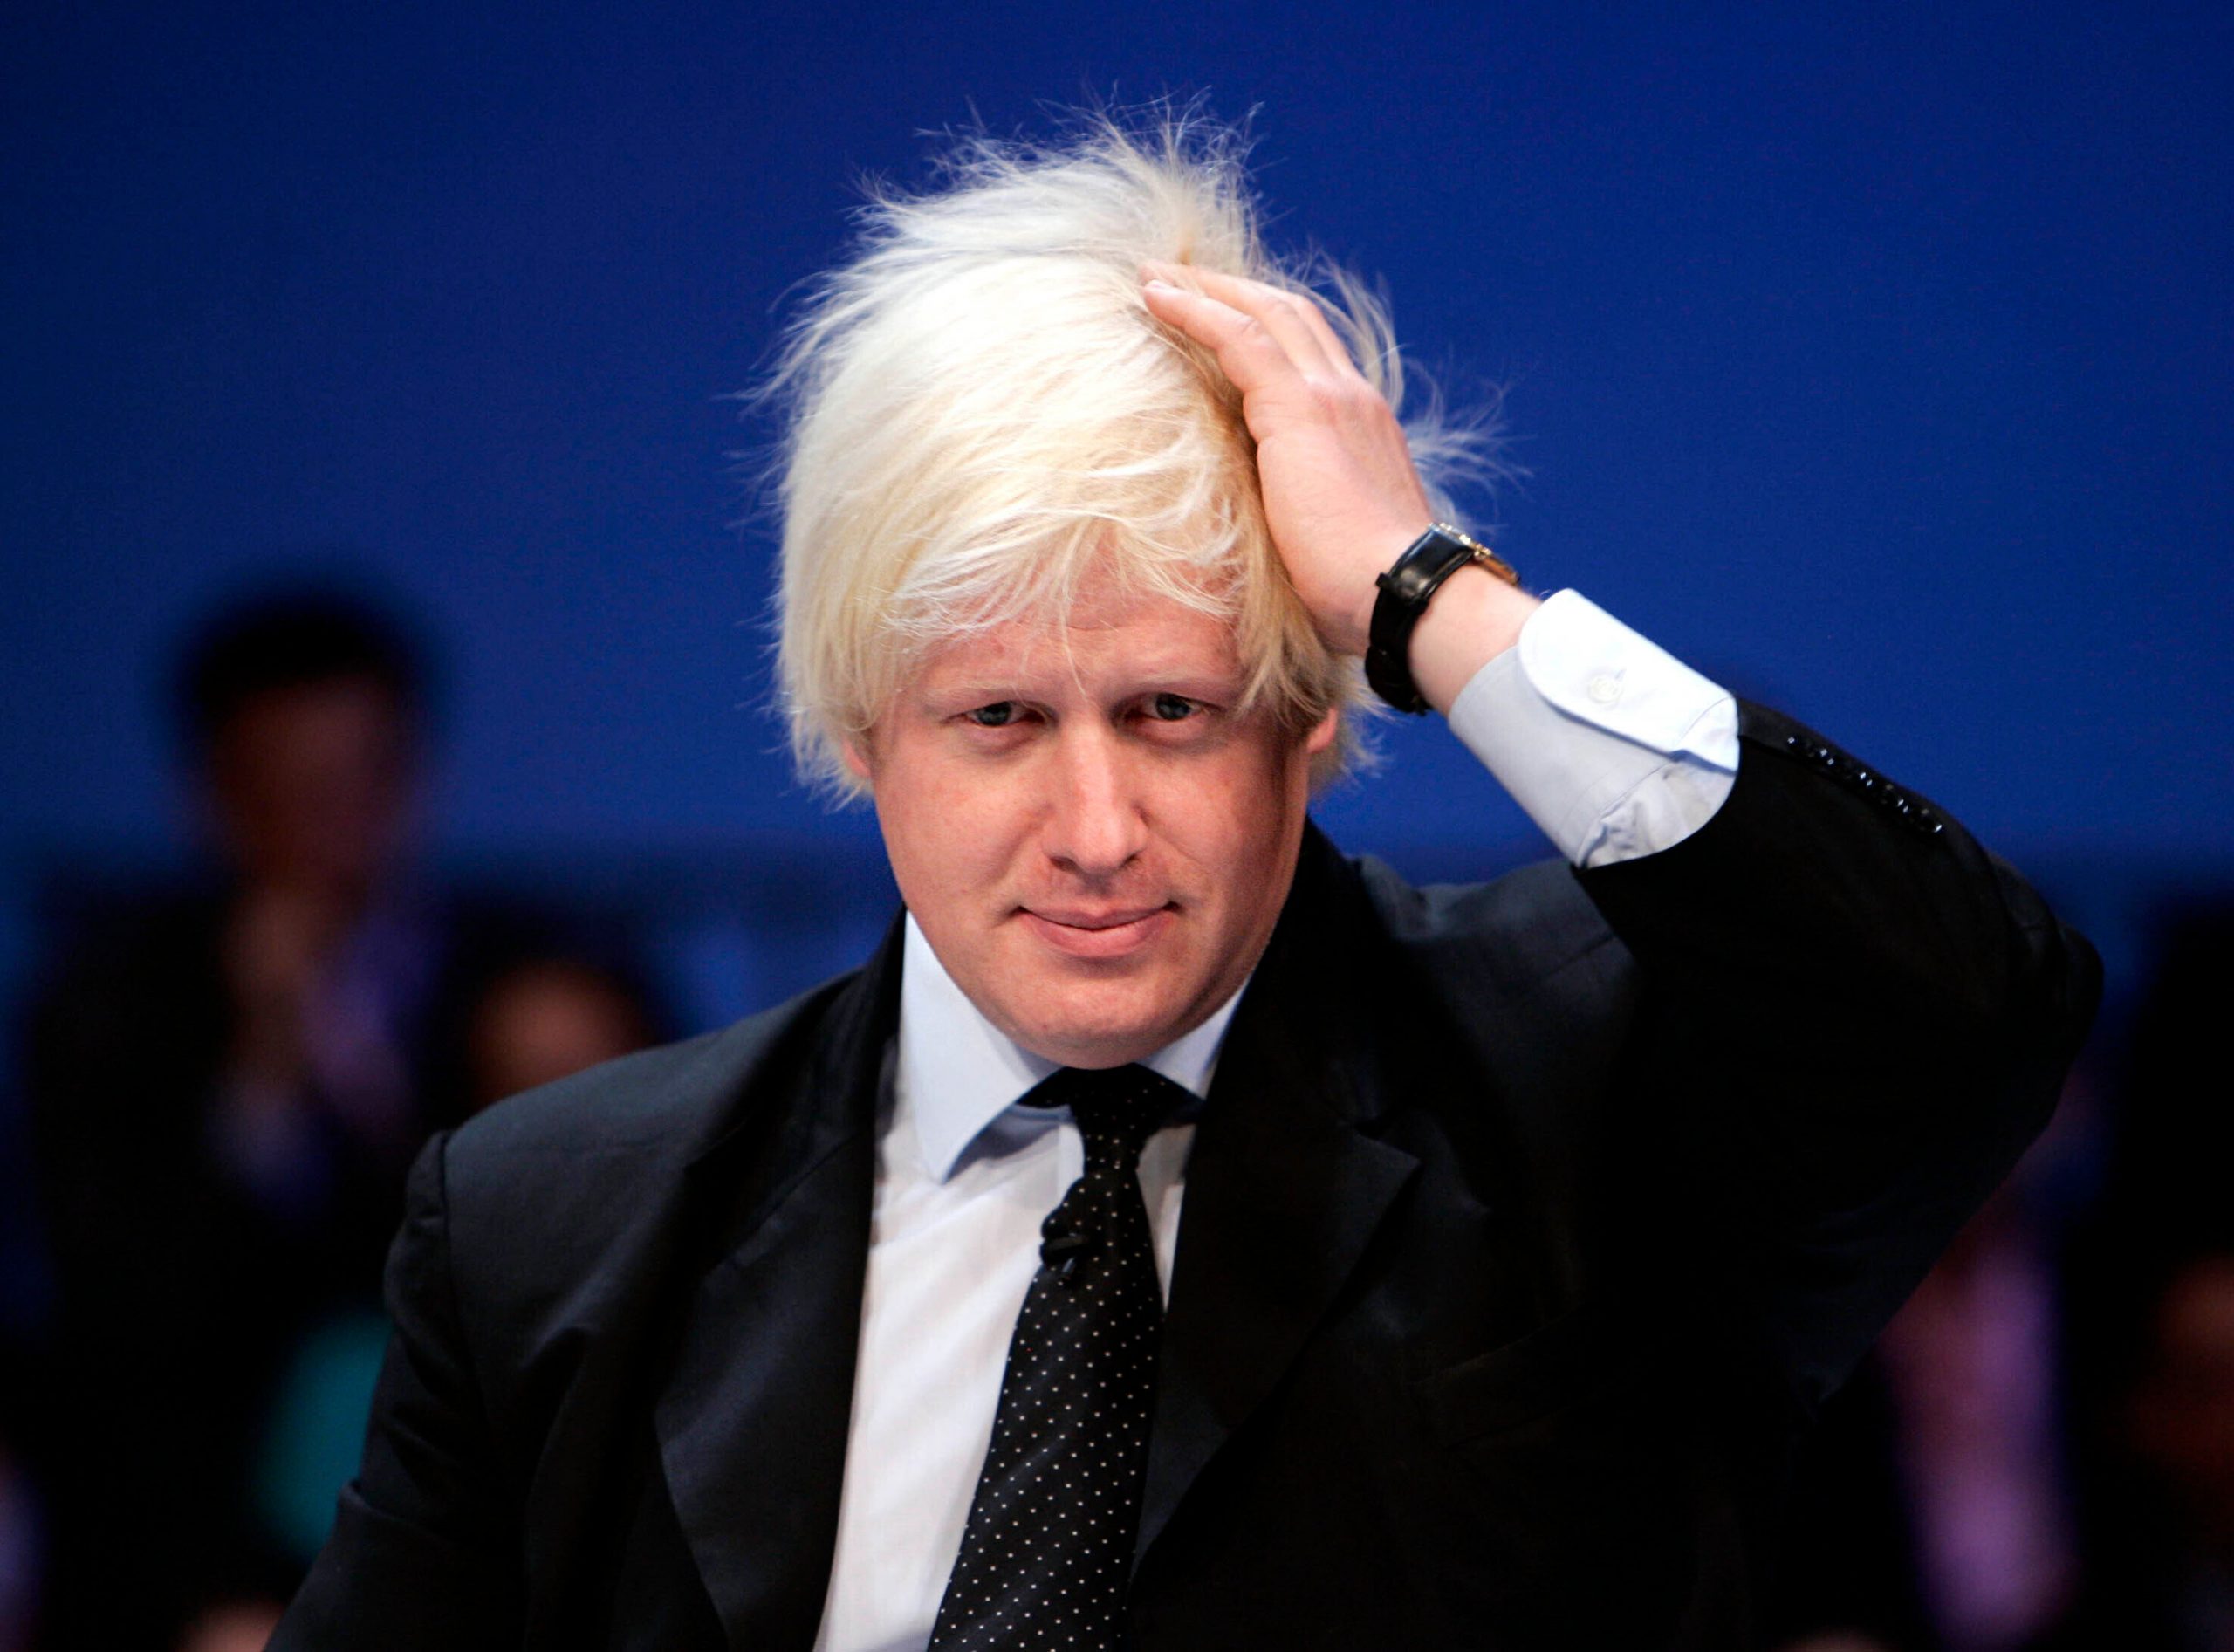 Where is UK’s PM Boris Johnson? ‘Missing in action’ amid economic crisis